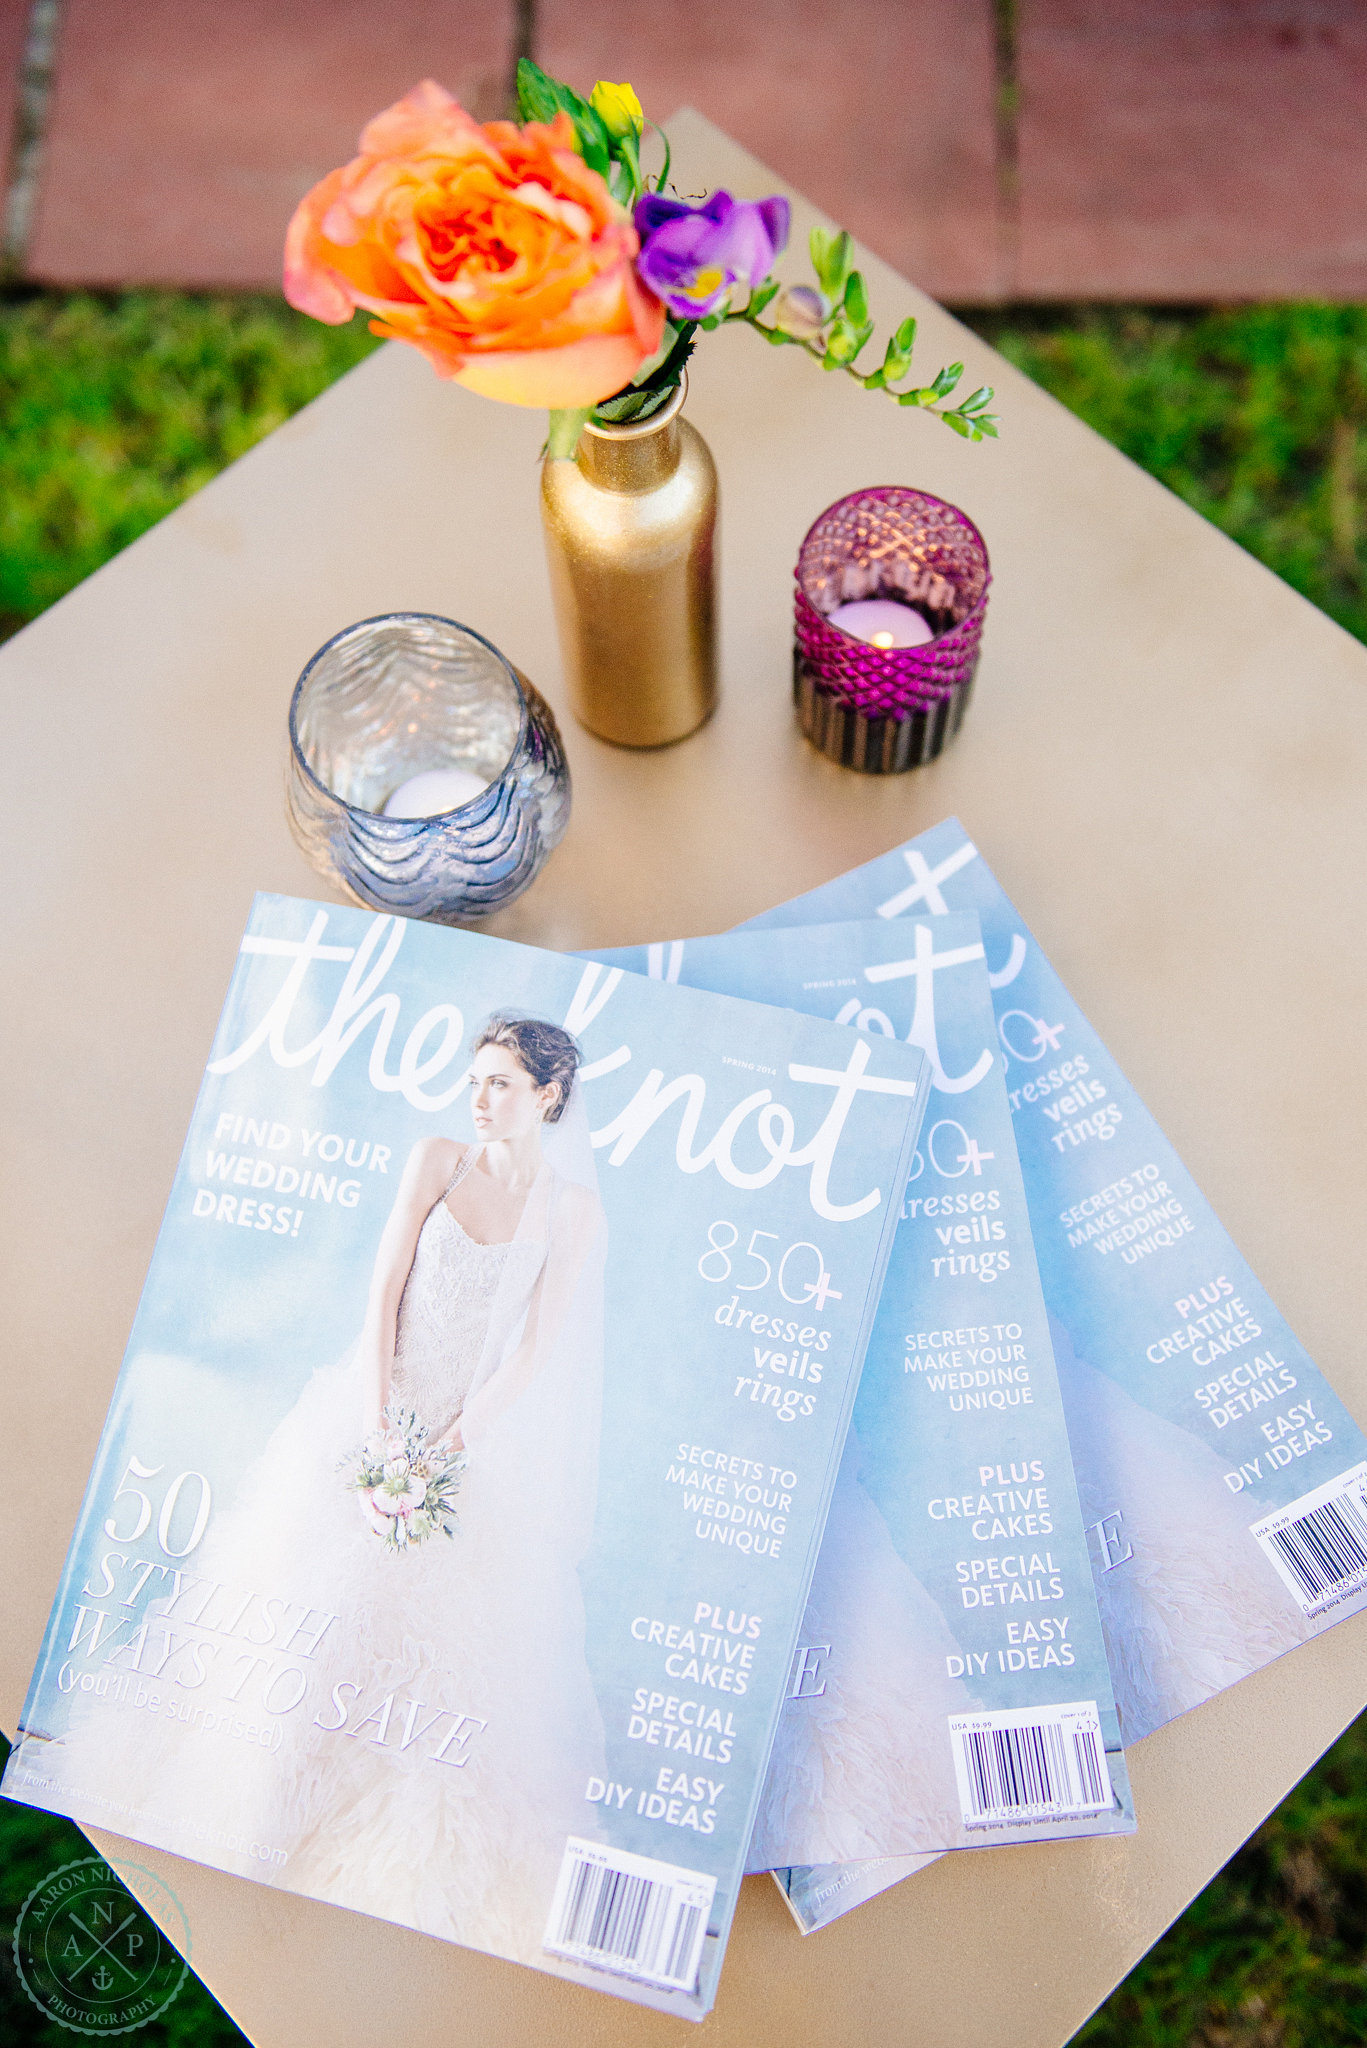 The-Knot-magazine-lounge-garden-wedding-gold-vase-plum-accent